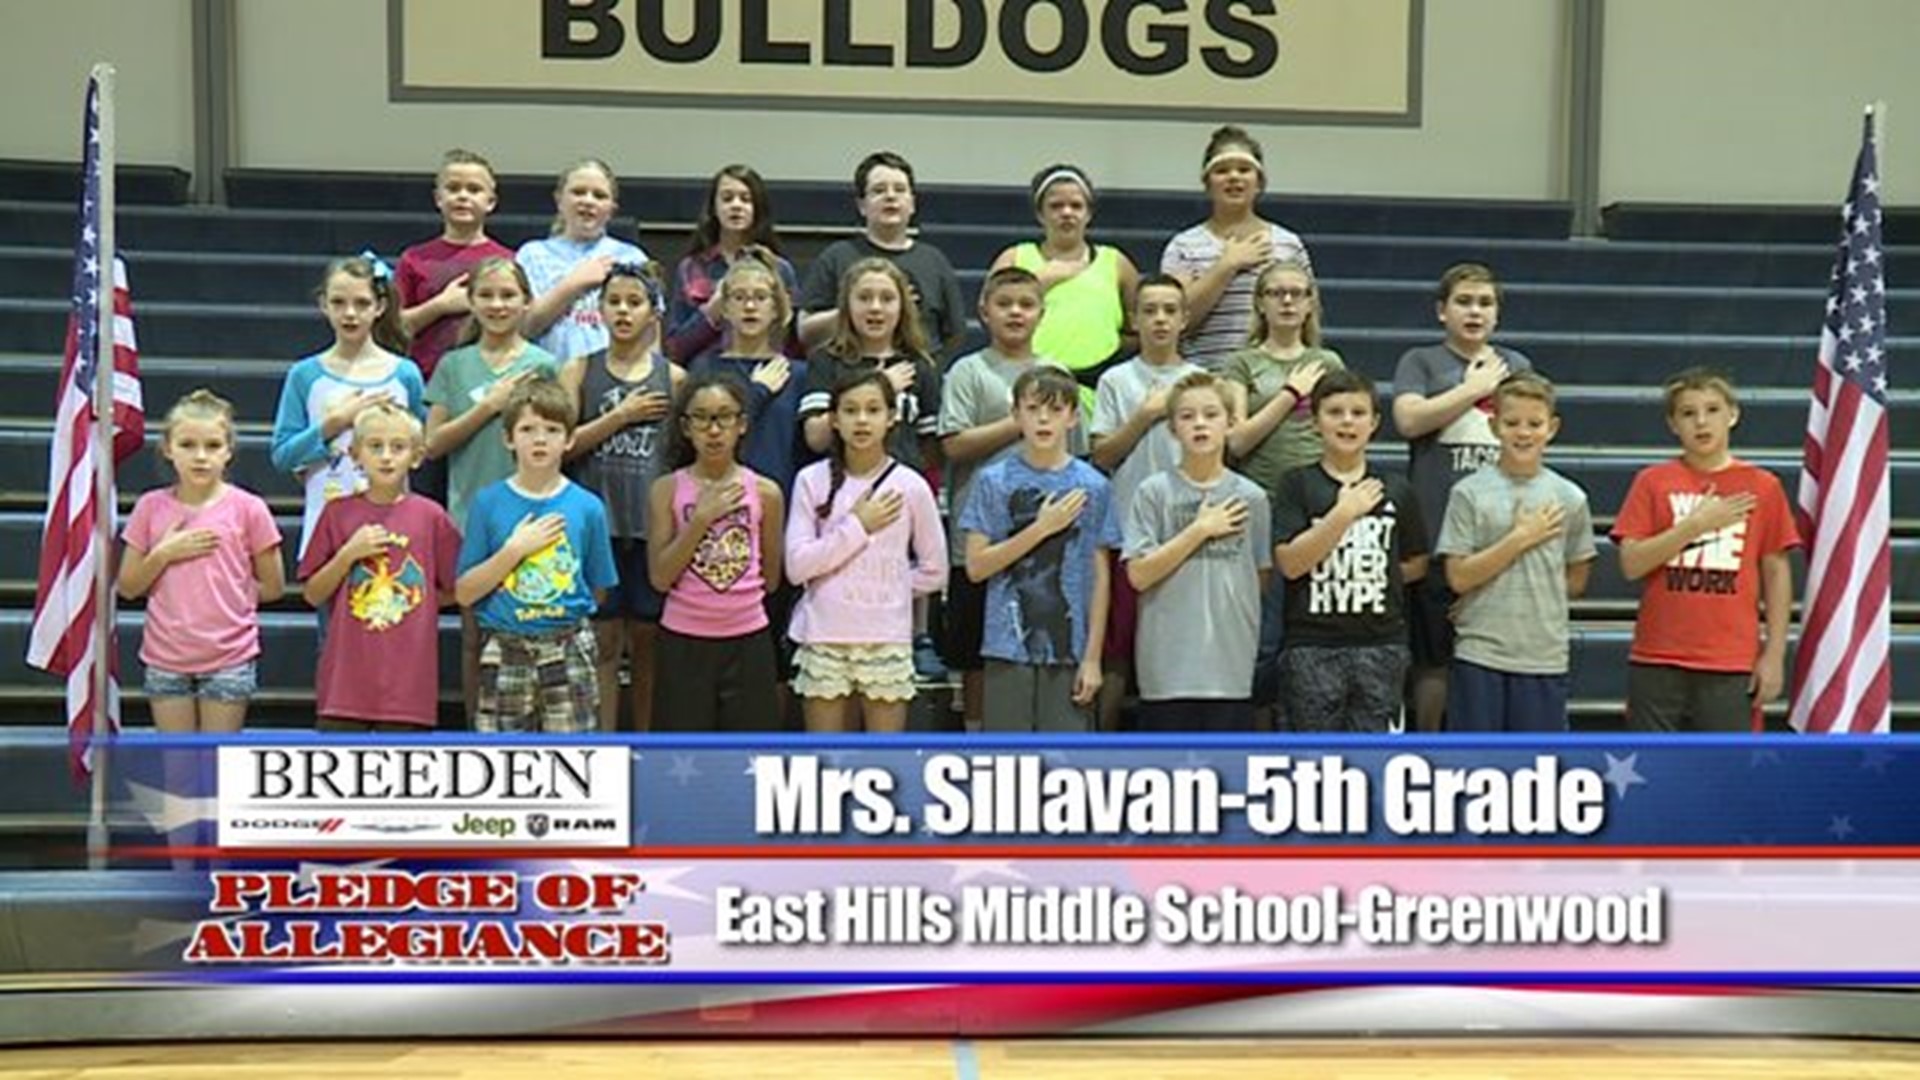 East Hills Middle School, Greenwood - Mrs. Sillavan - 5th Grade